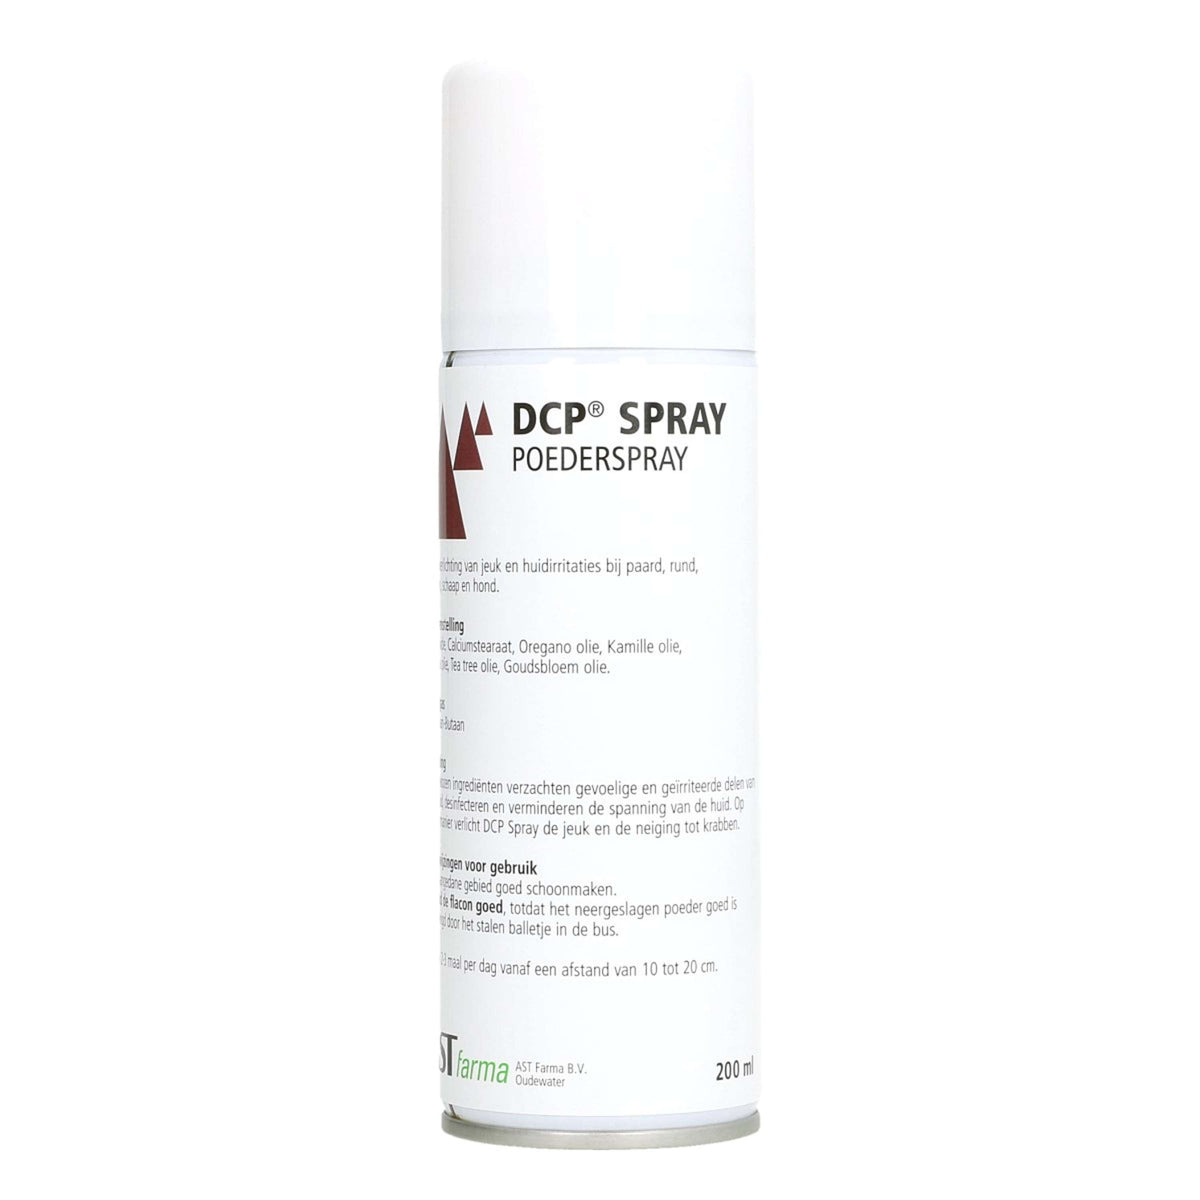 AST-Farma Puderspray DCP Spray Pferd/Hund